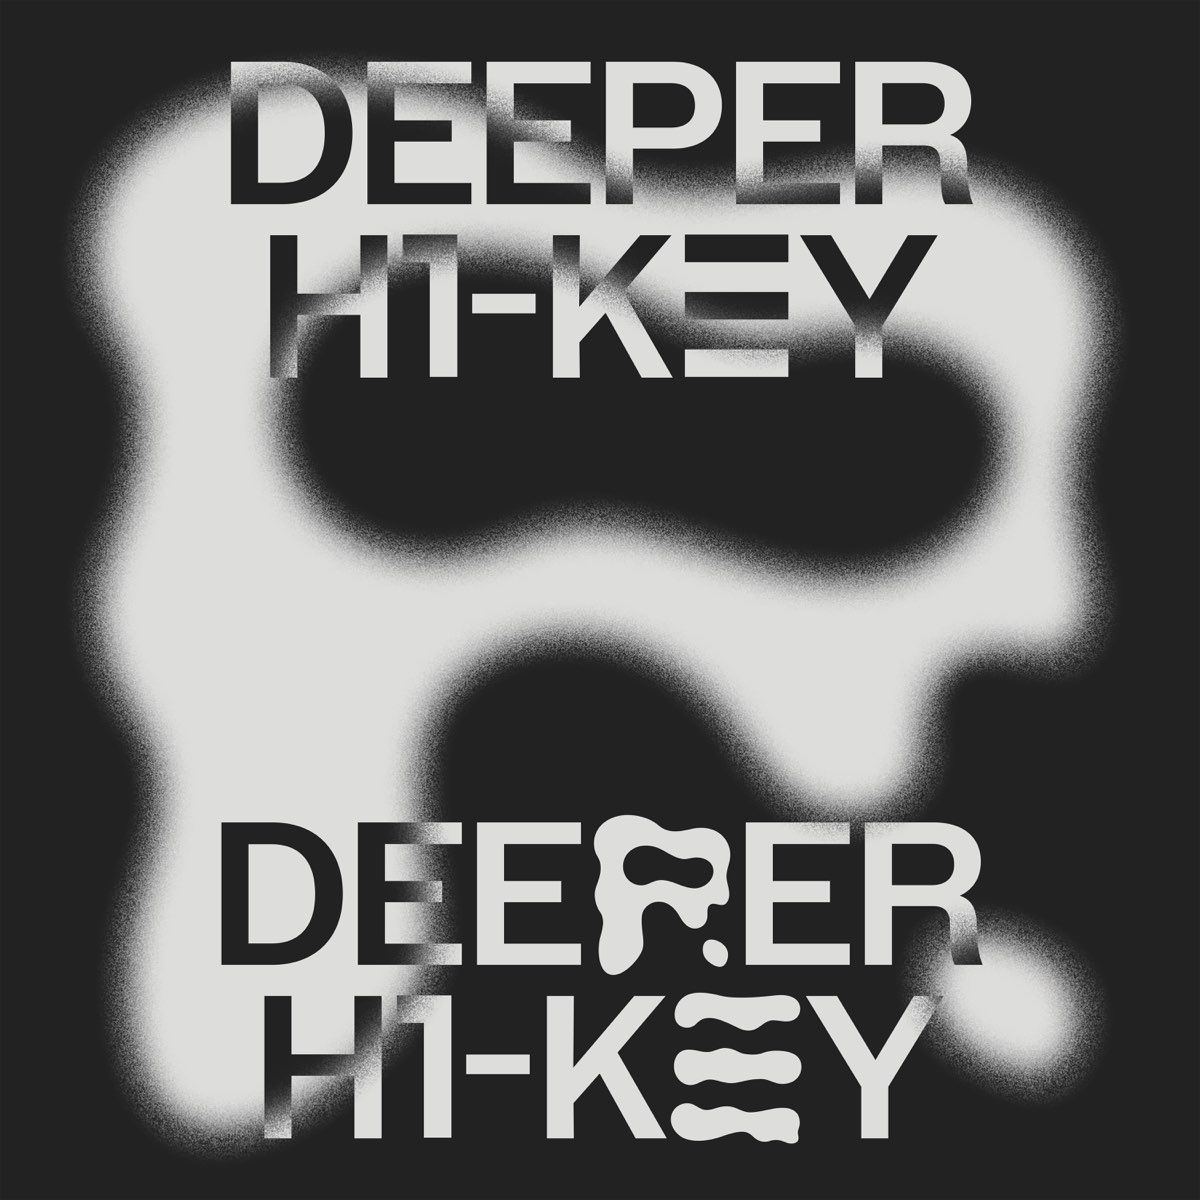 H1-KEY — Deeper cover artwork